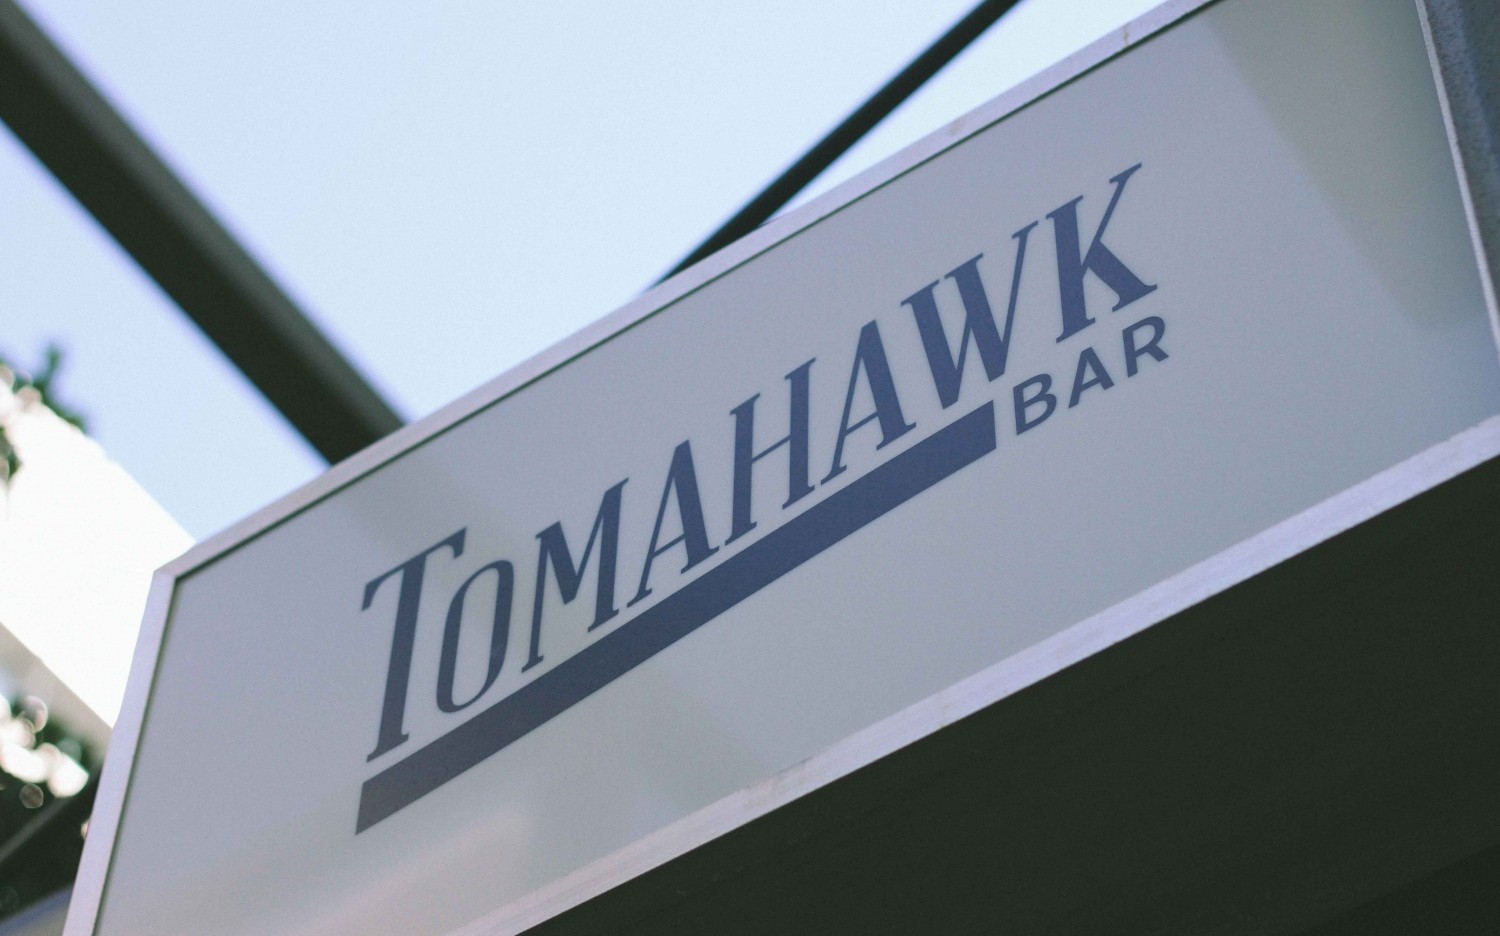 TWE Tomahawk Bar, South Bank